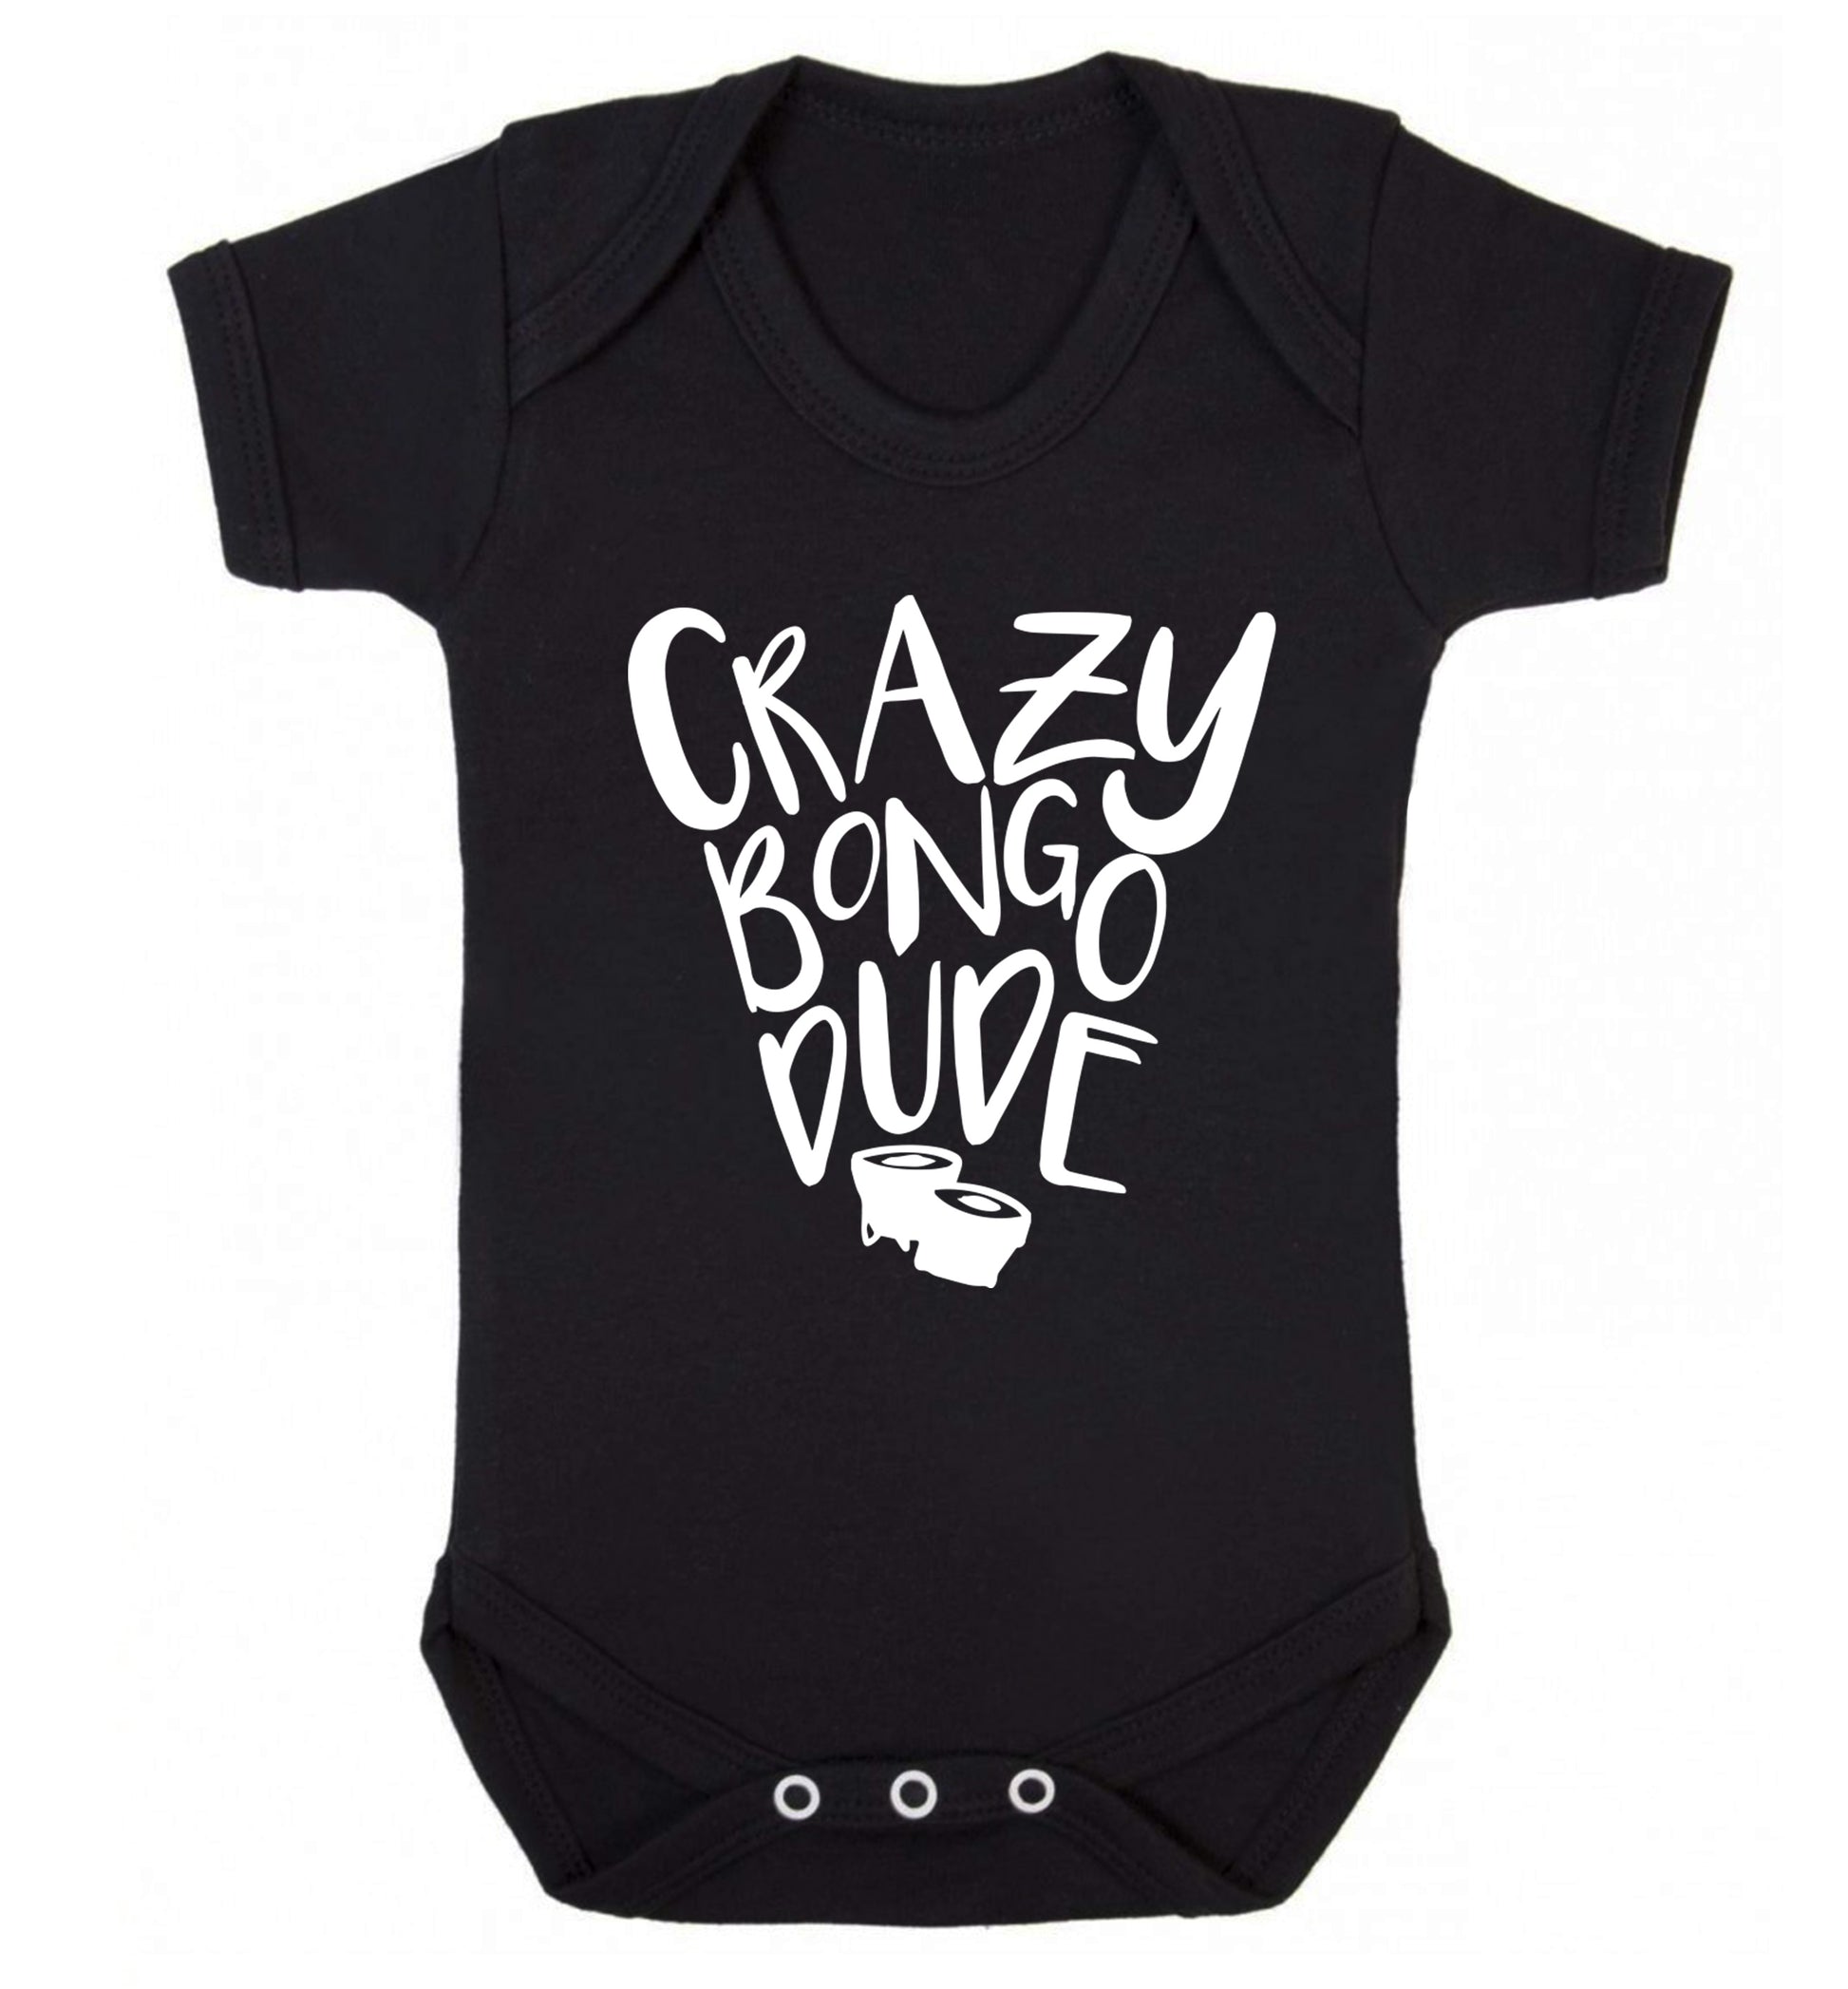 Crazy bongo dude Baby Vest black 18-24 months